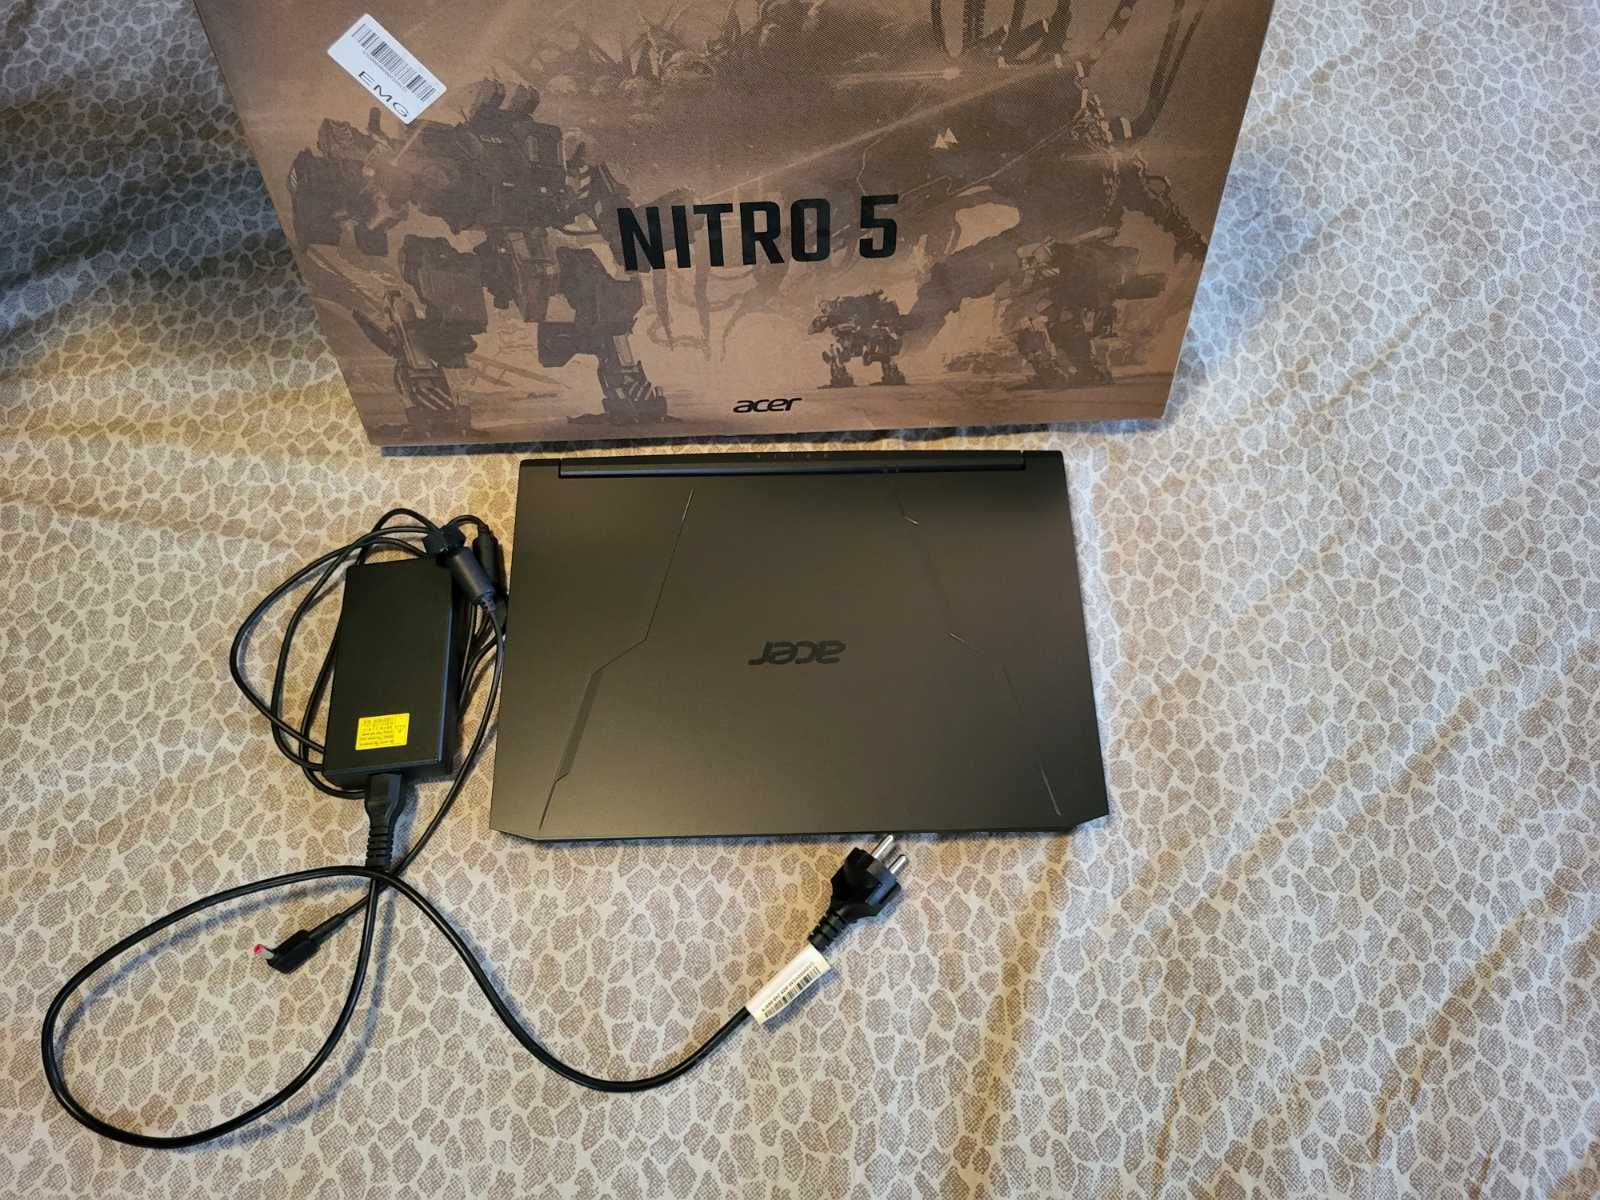 Геймърски лаптоп Acer Nitro 5 AN515-57-75CG